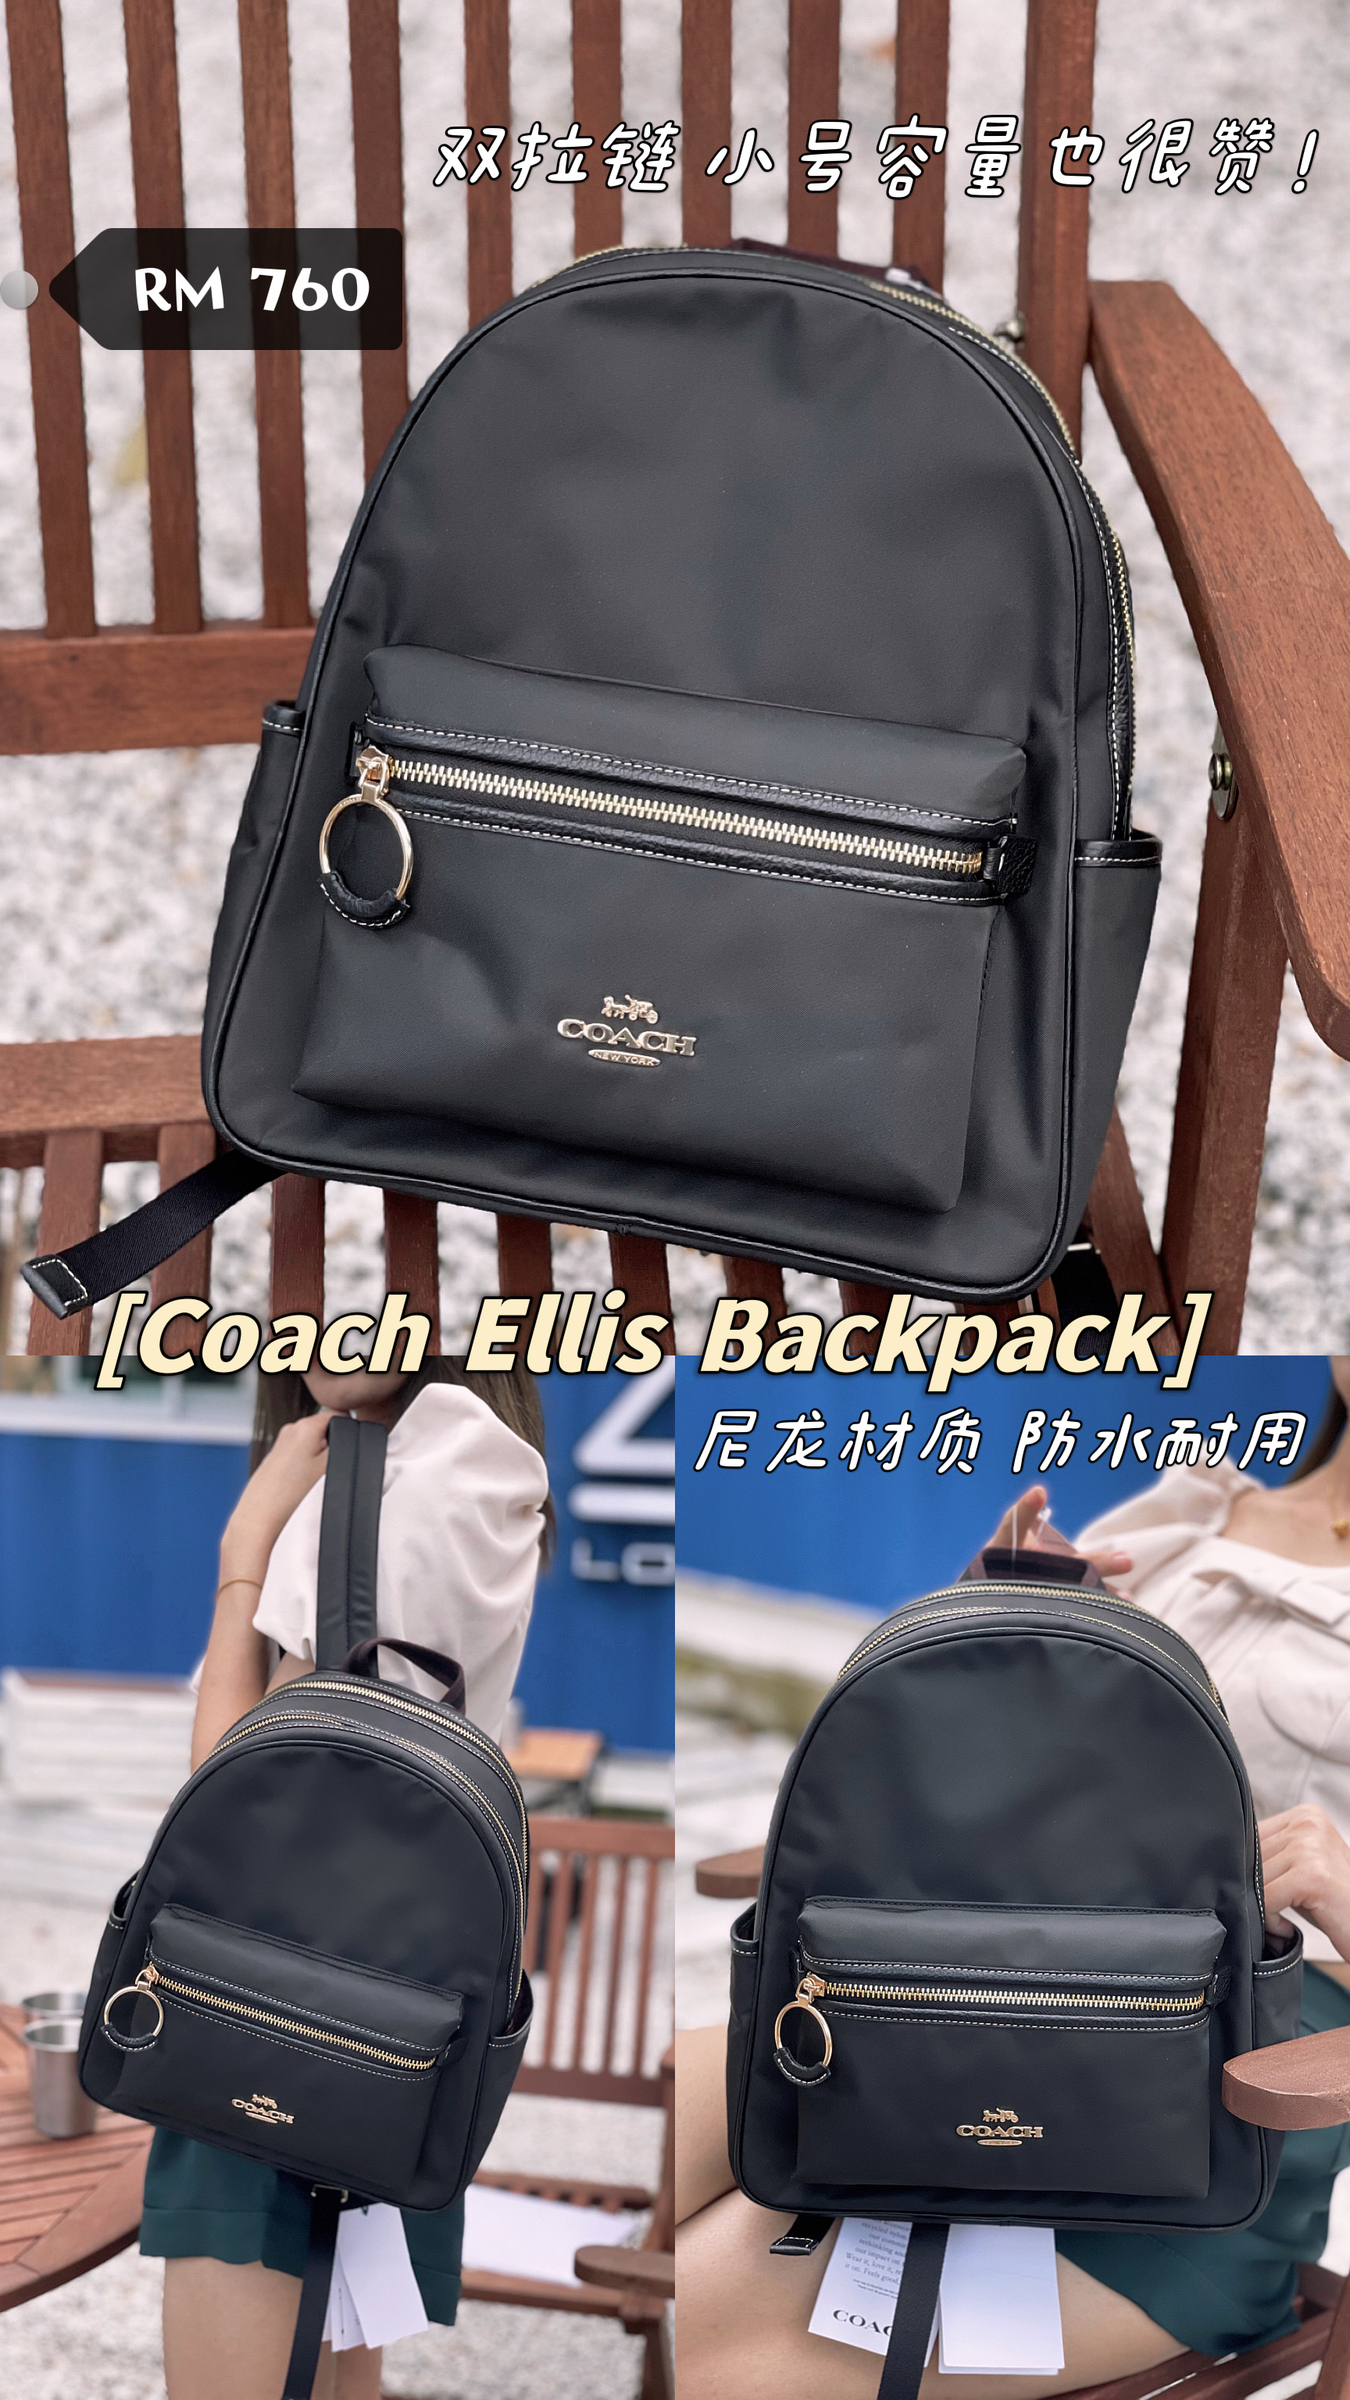 Coach Ellis Backpack